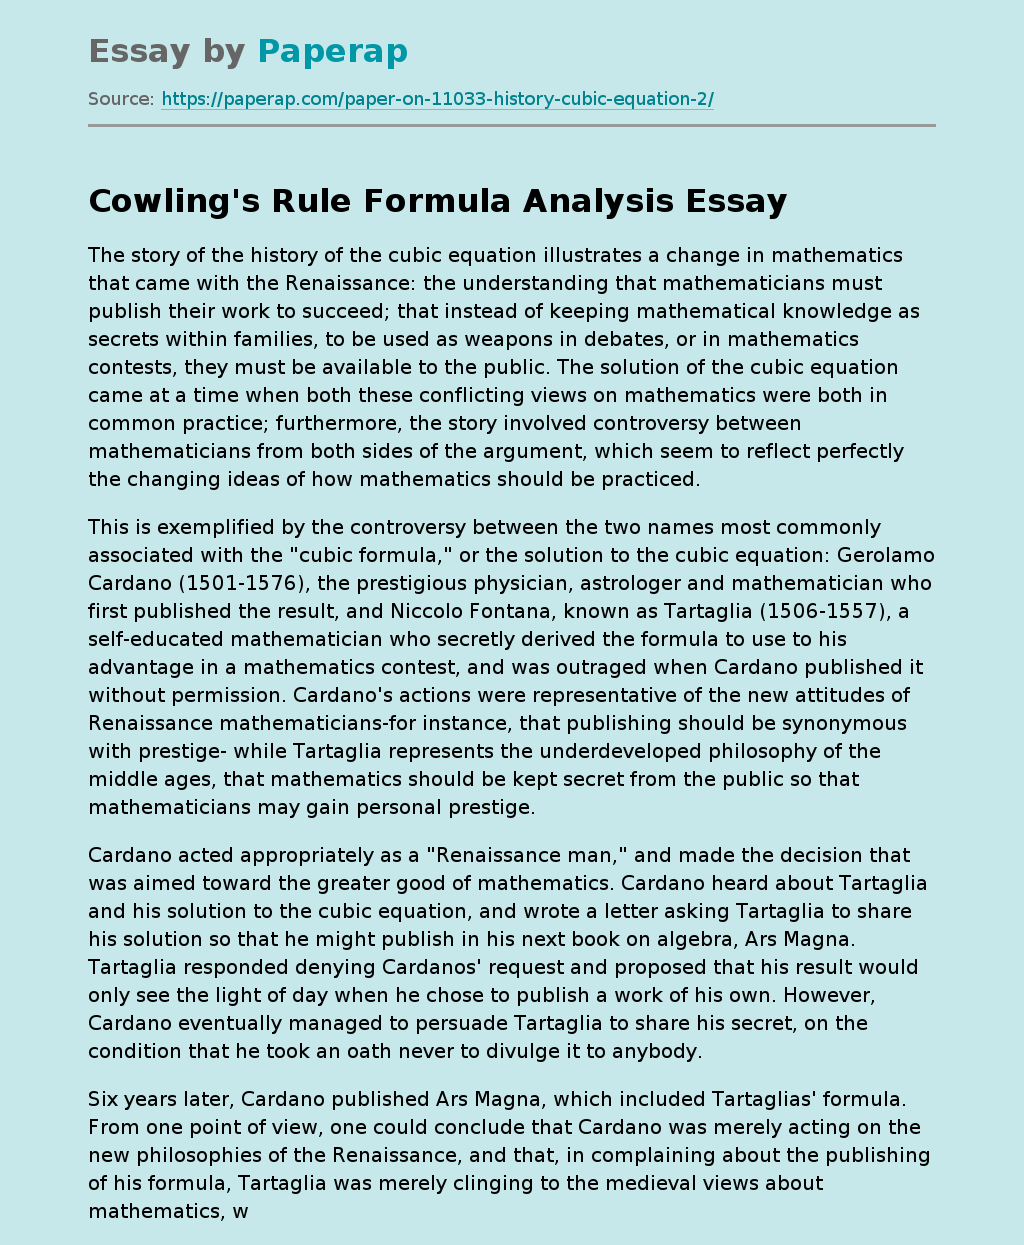 Cowling's Rule Formula Analysis